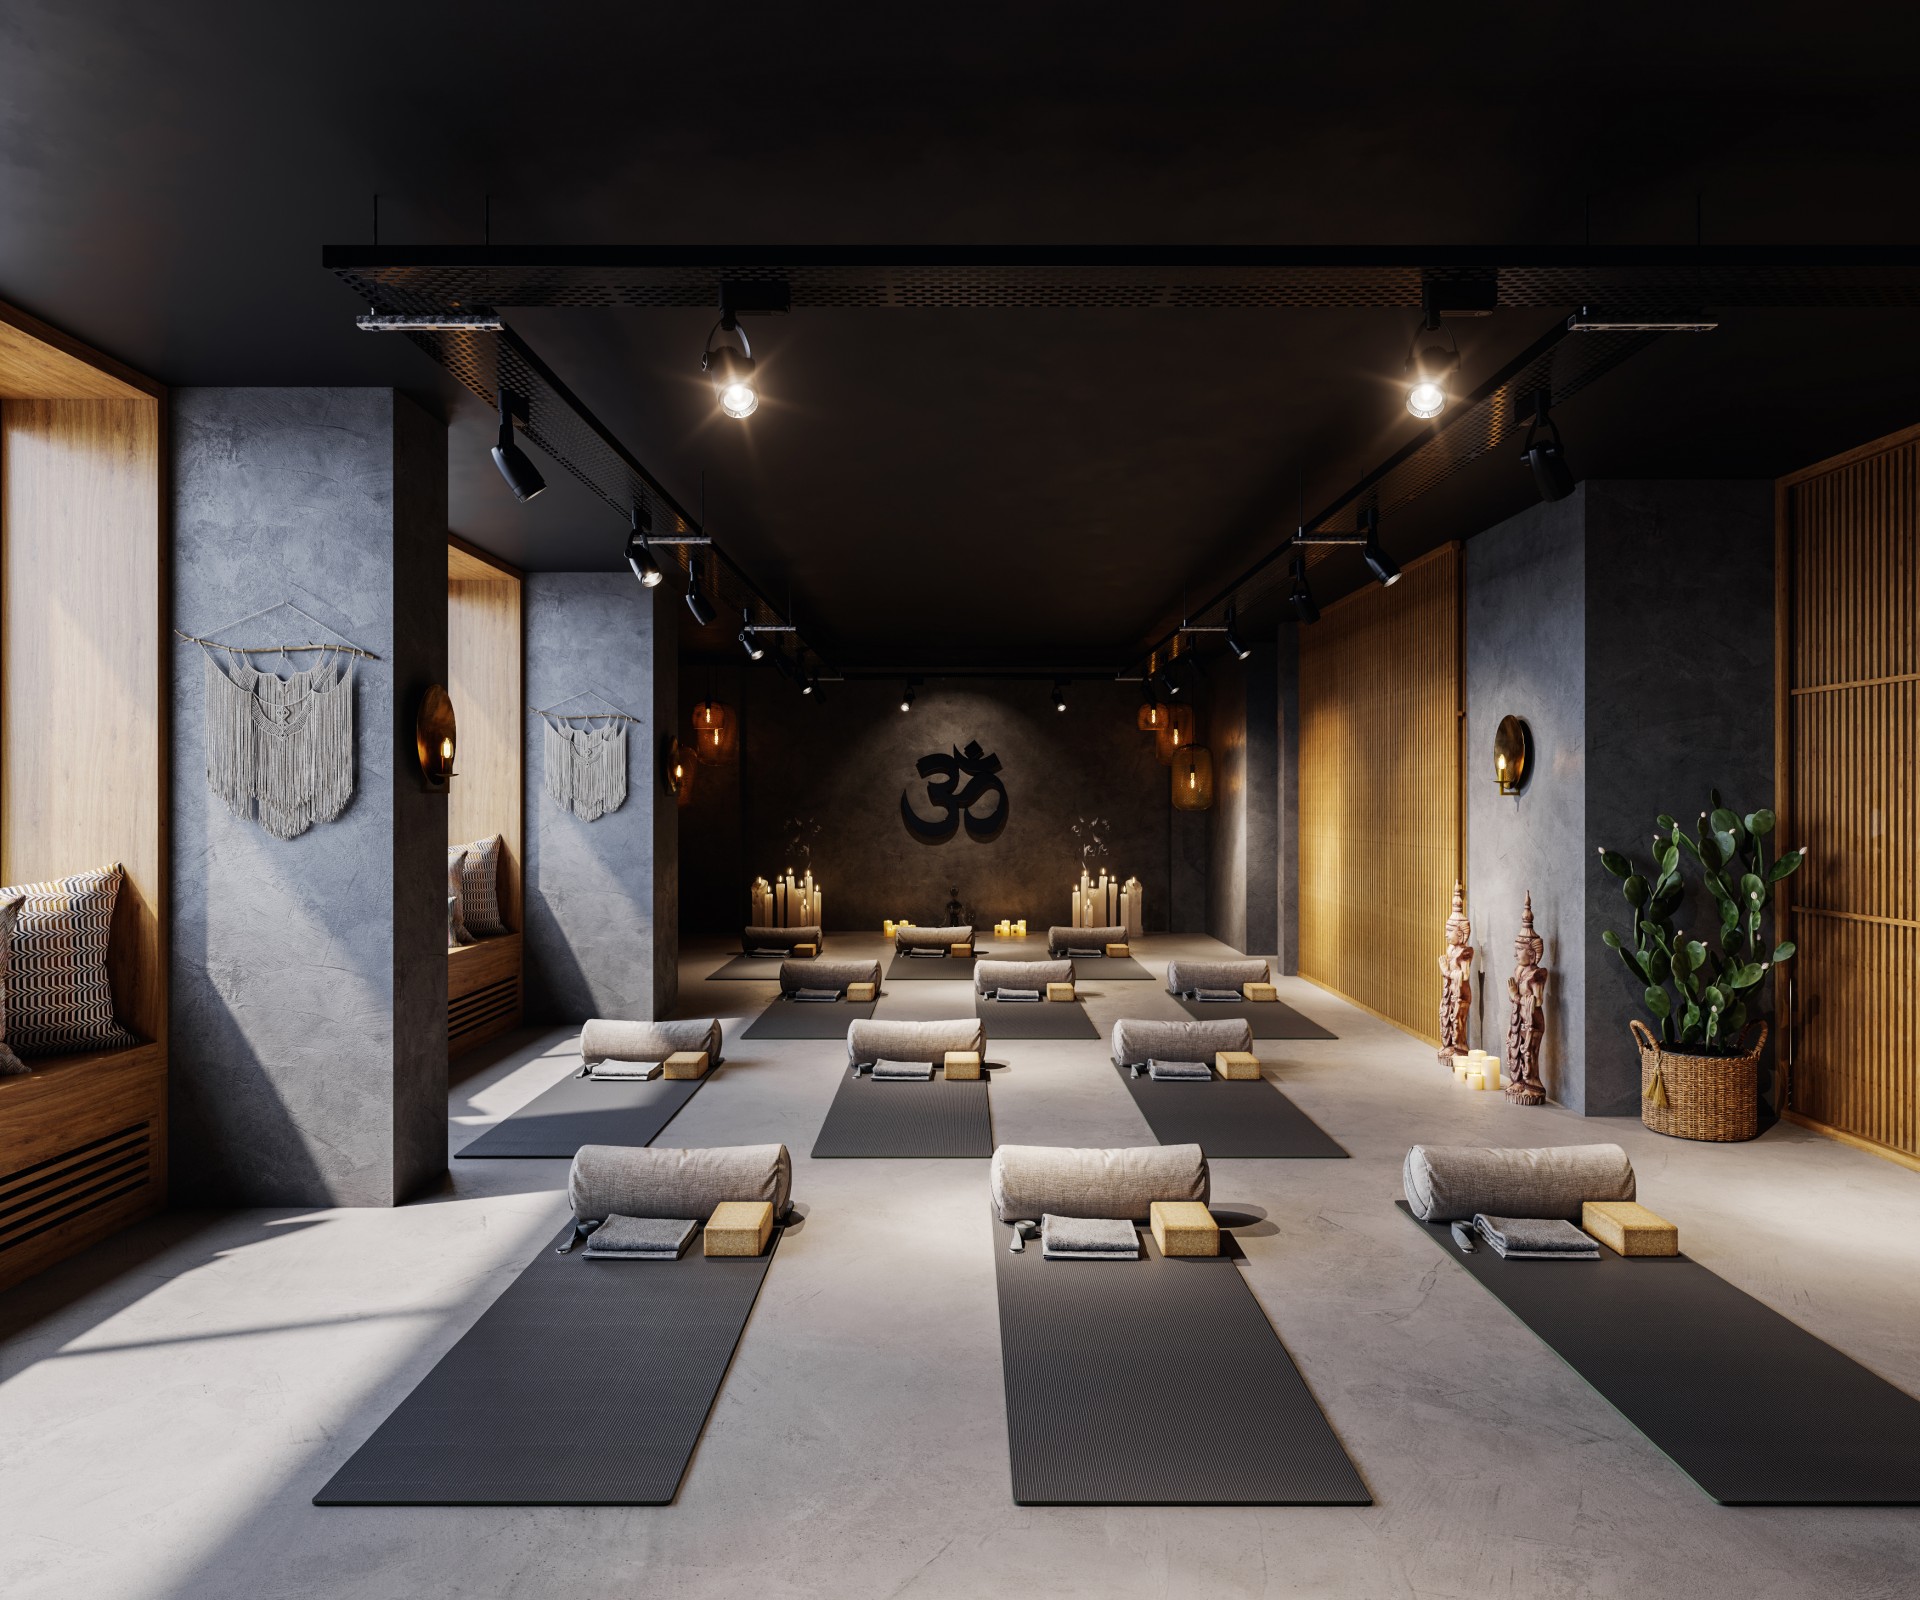 VWArtclub - Yoga Studio